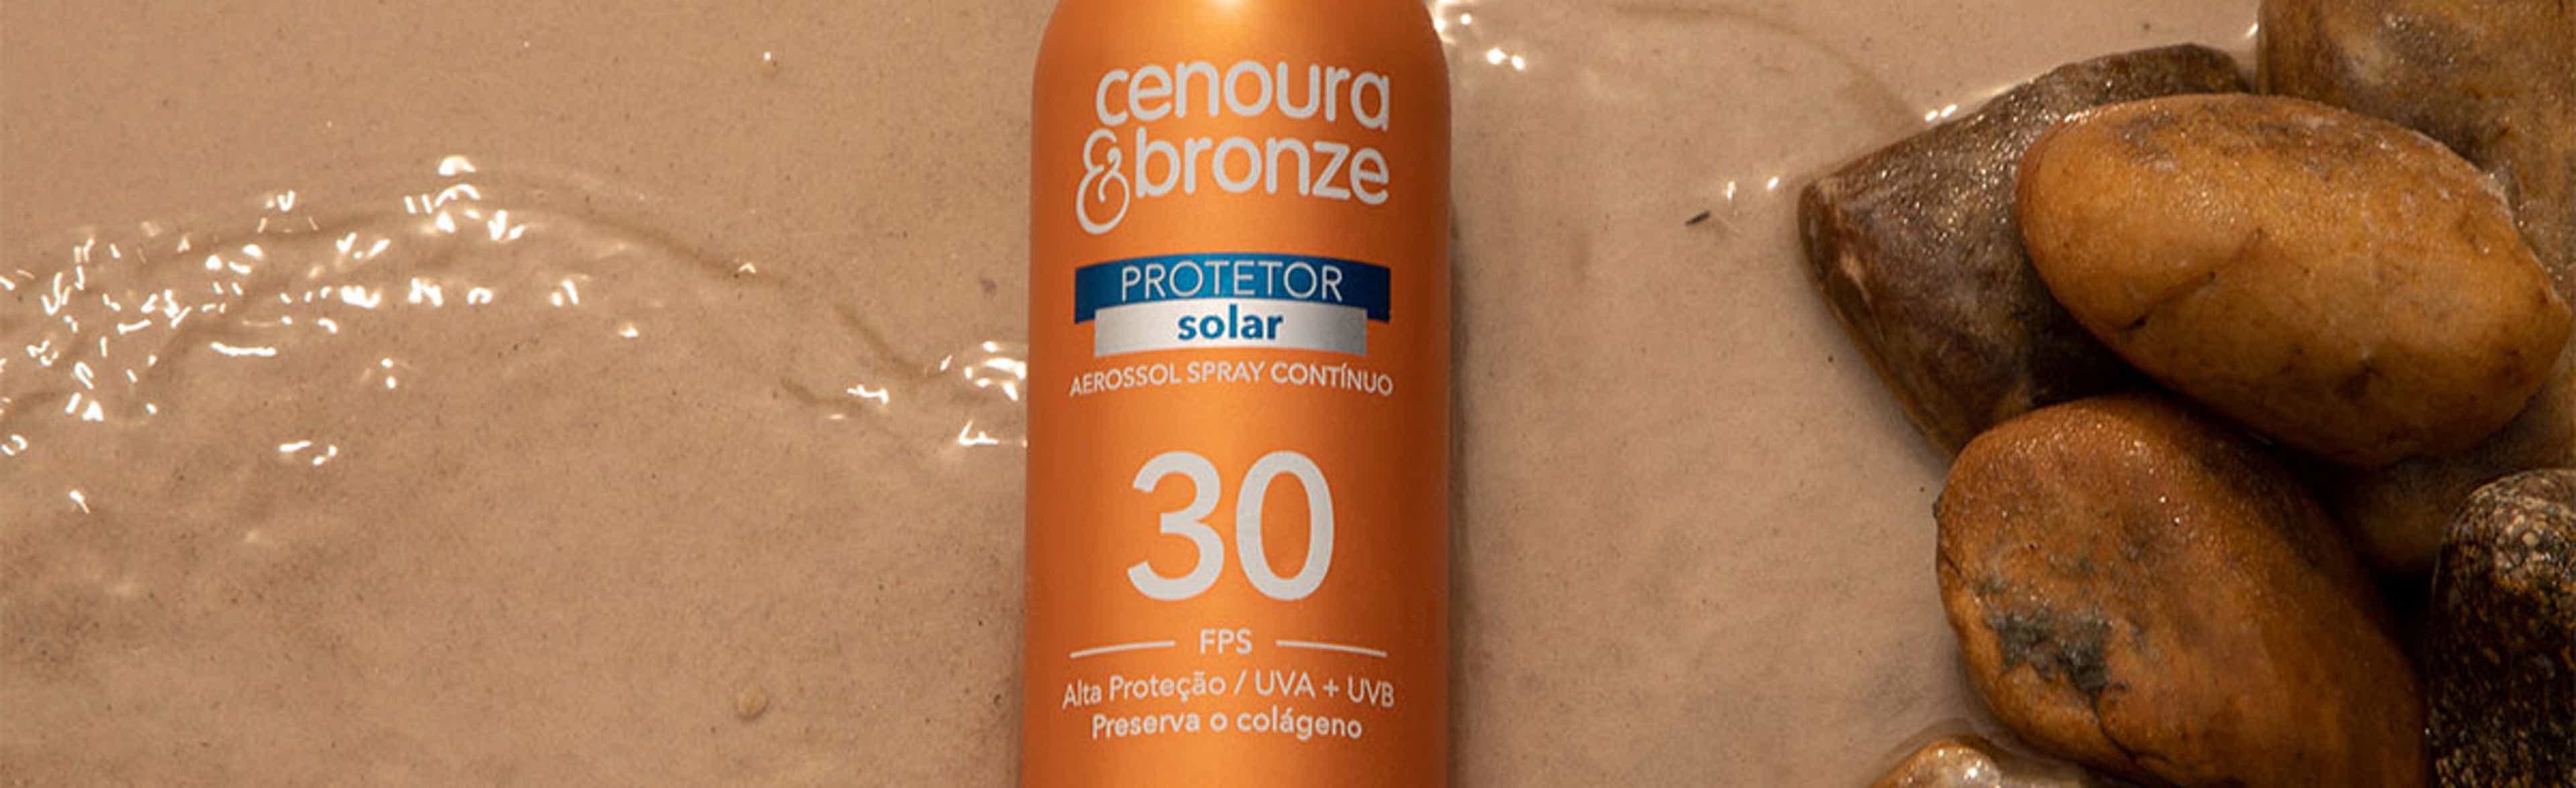 Coty_Consumer-brands_Cenoura-bronze_Hero_lg.jpg